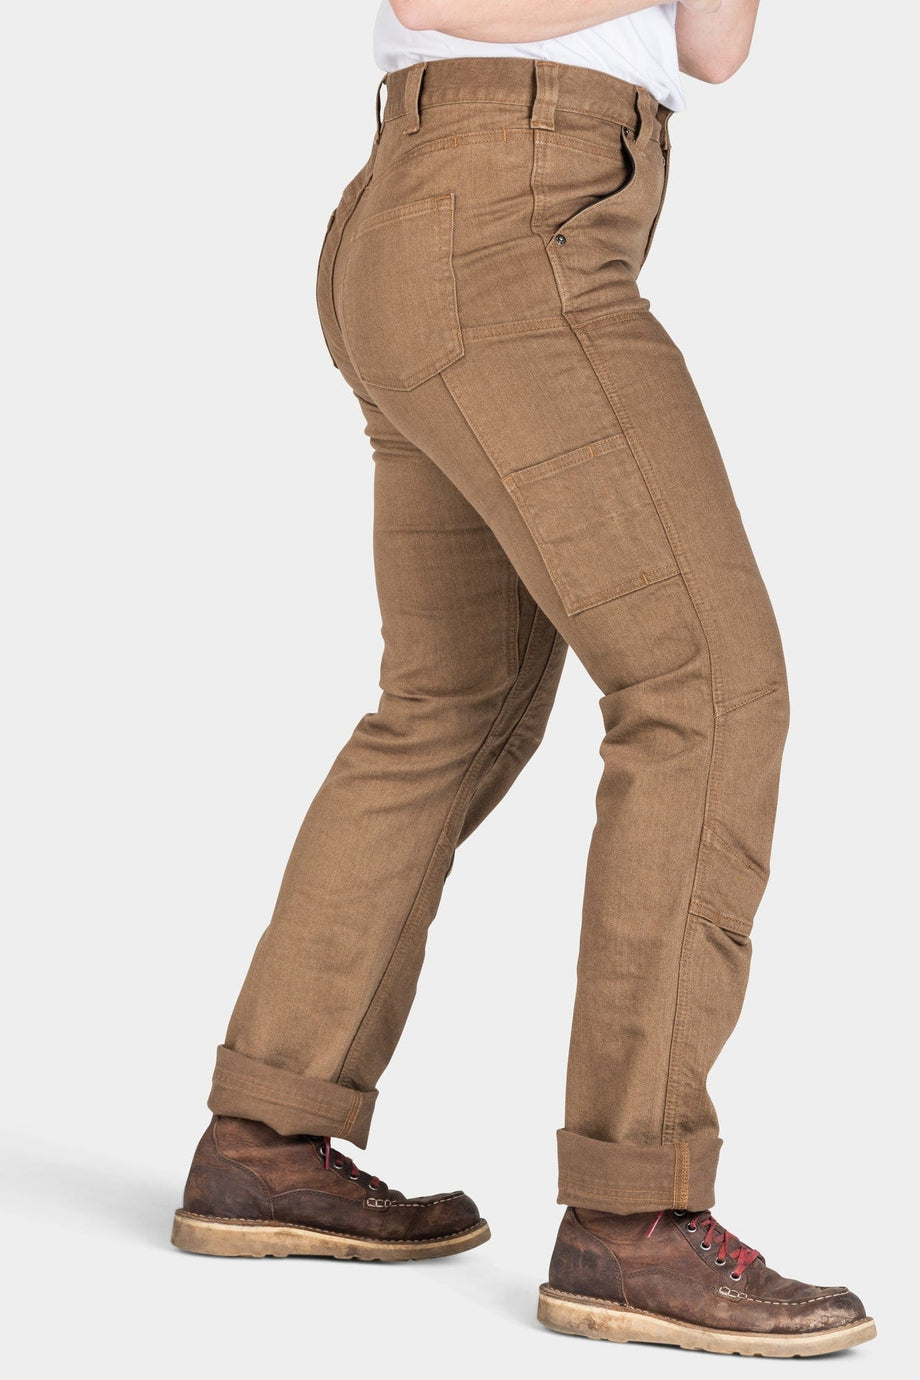 Dovetail WorkwearShop Pants, 30 Inseam - Womens